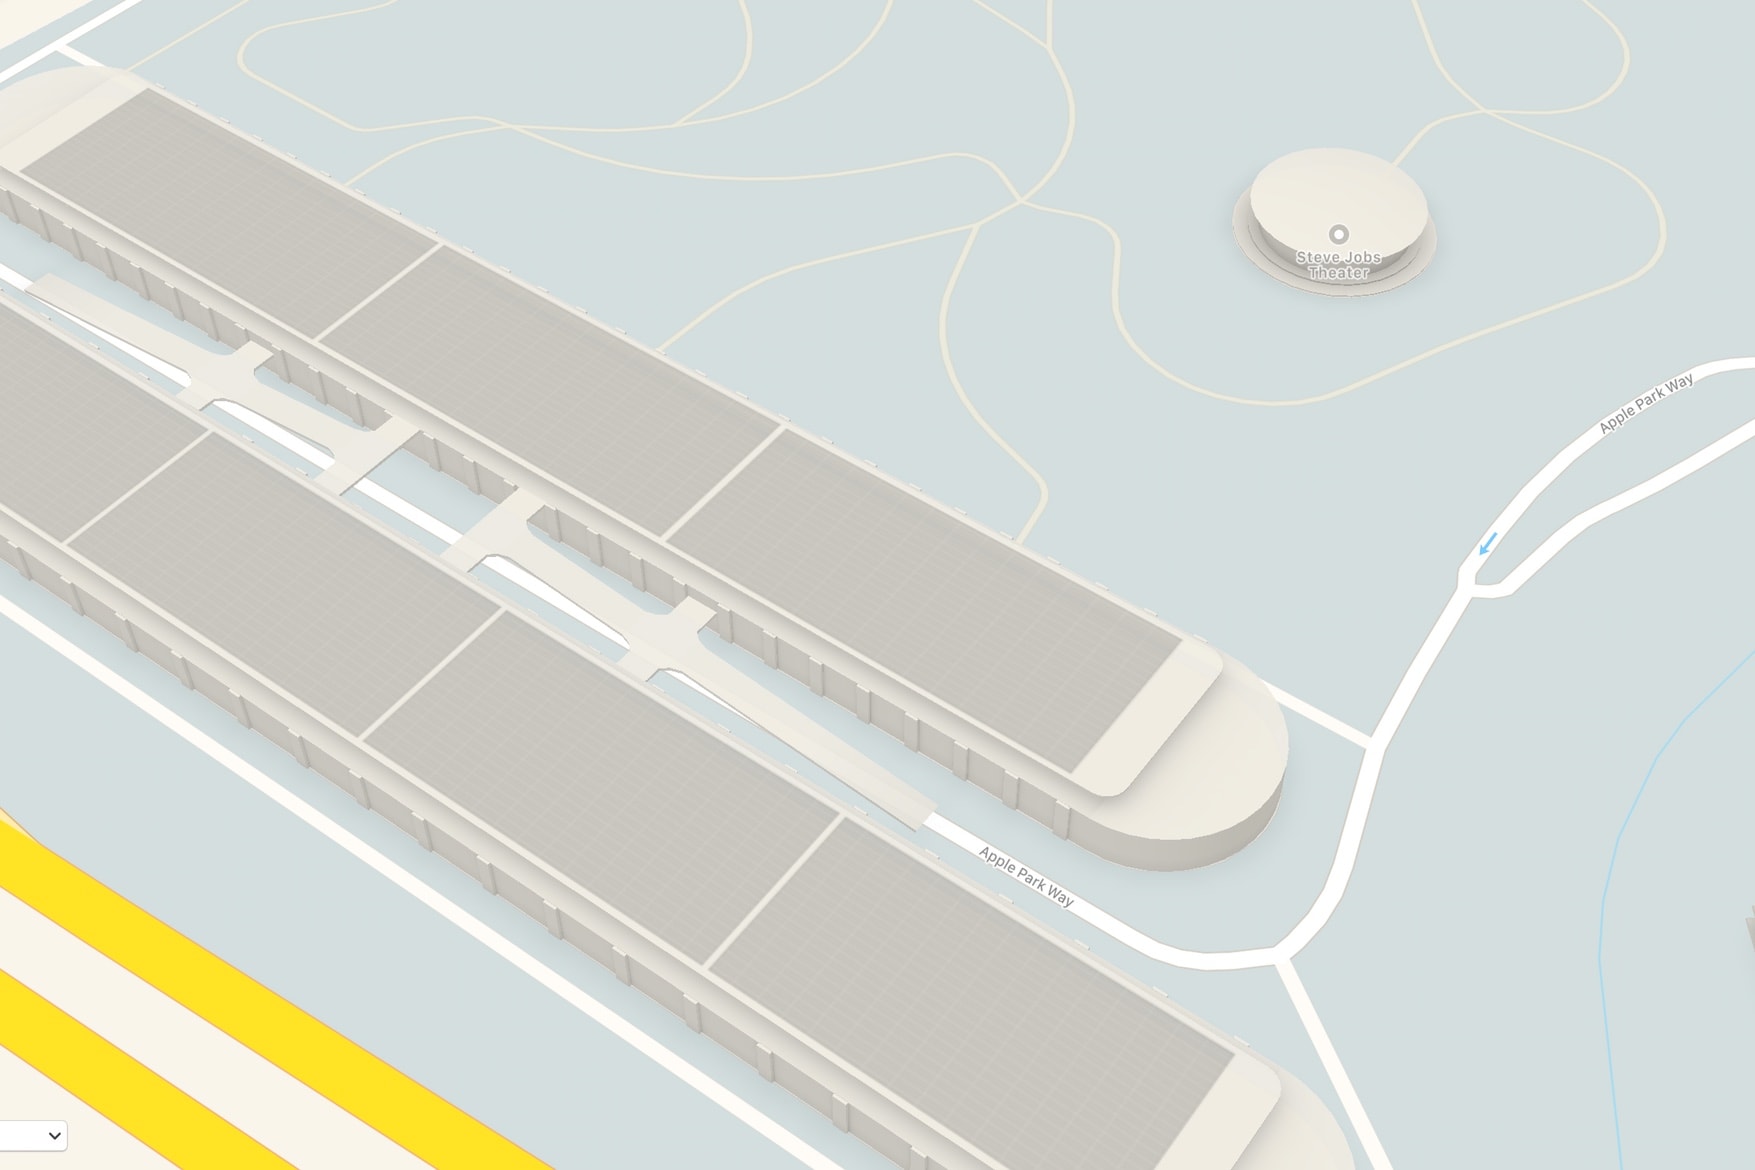 Apple Map 更新曝光 Apple Park 第一手鳥瞰地圖